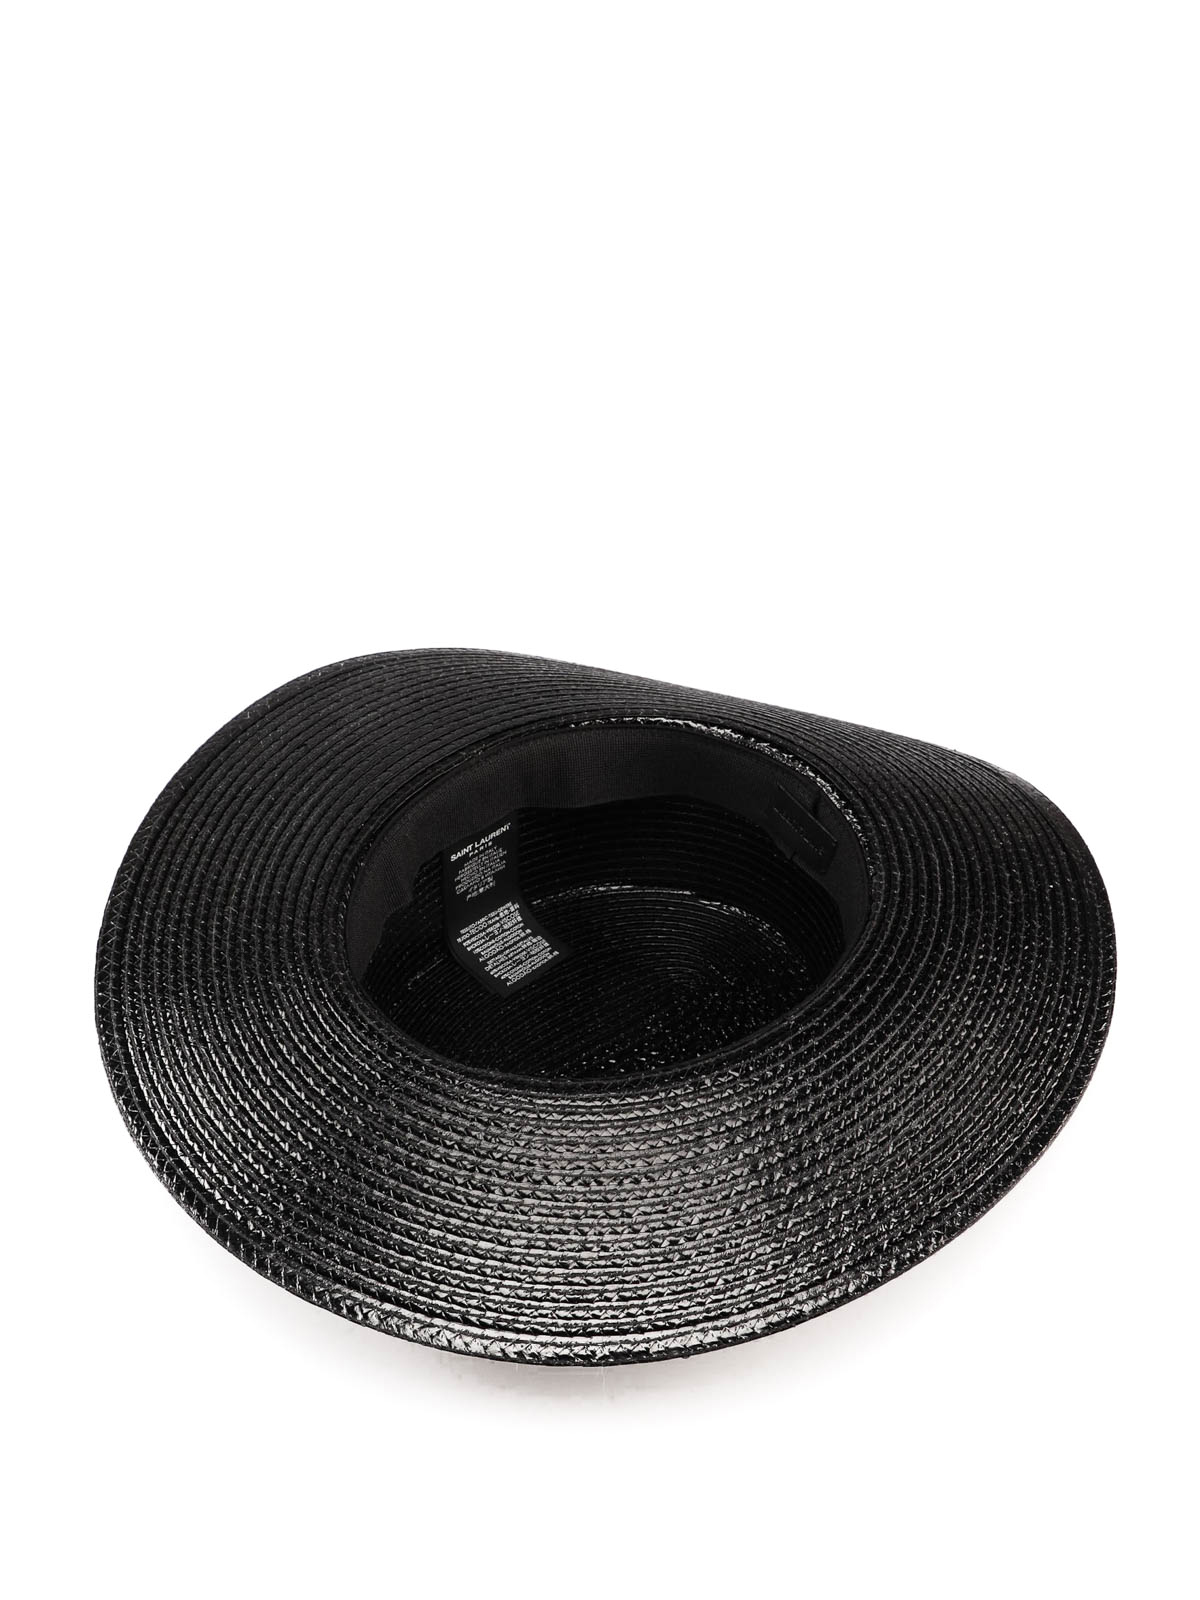 Saint Laurent Black Large Straw Hat for Men